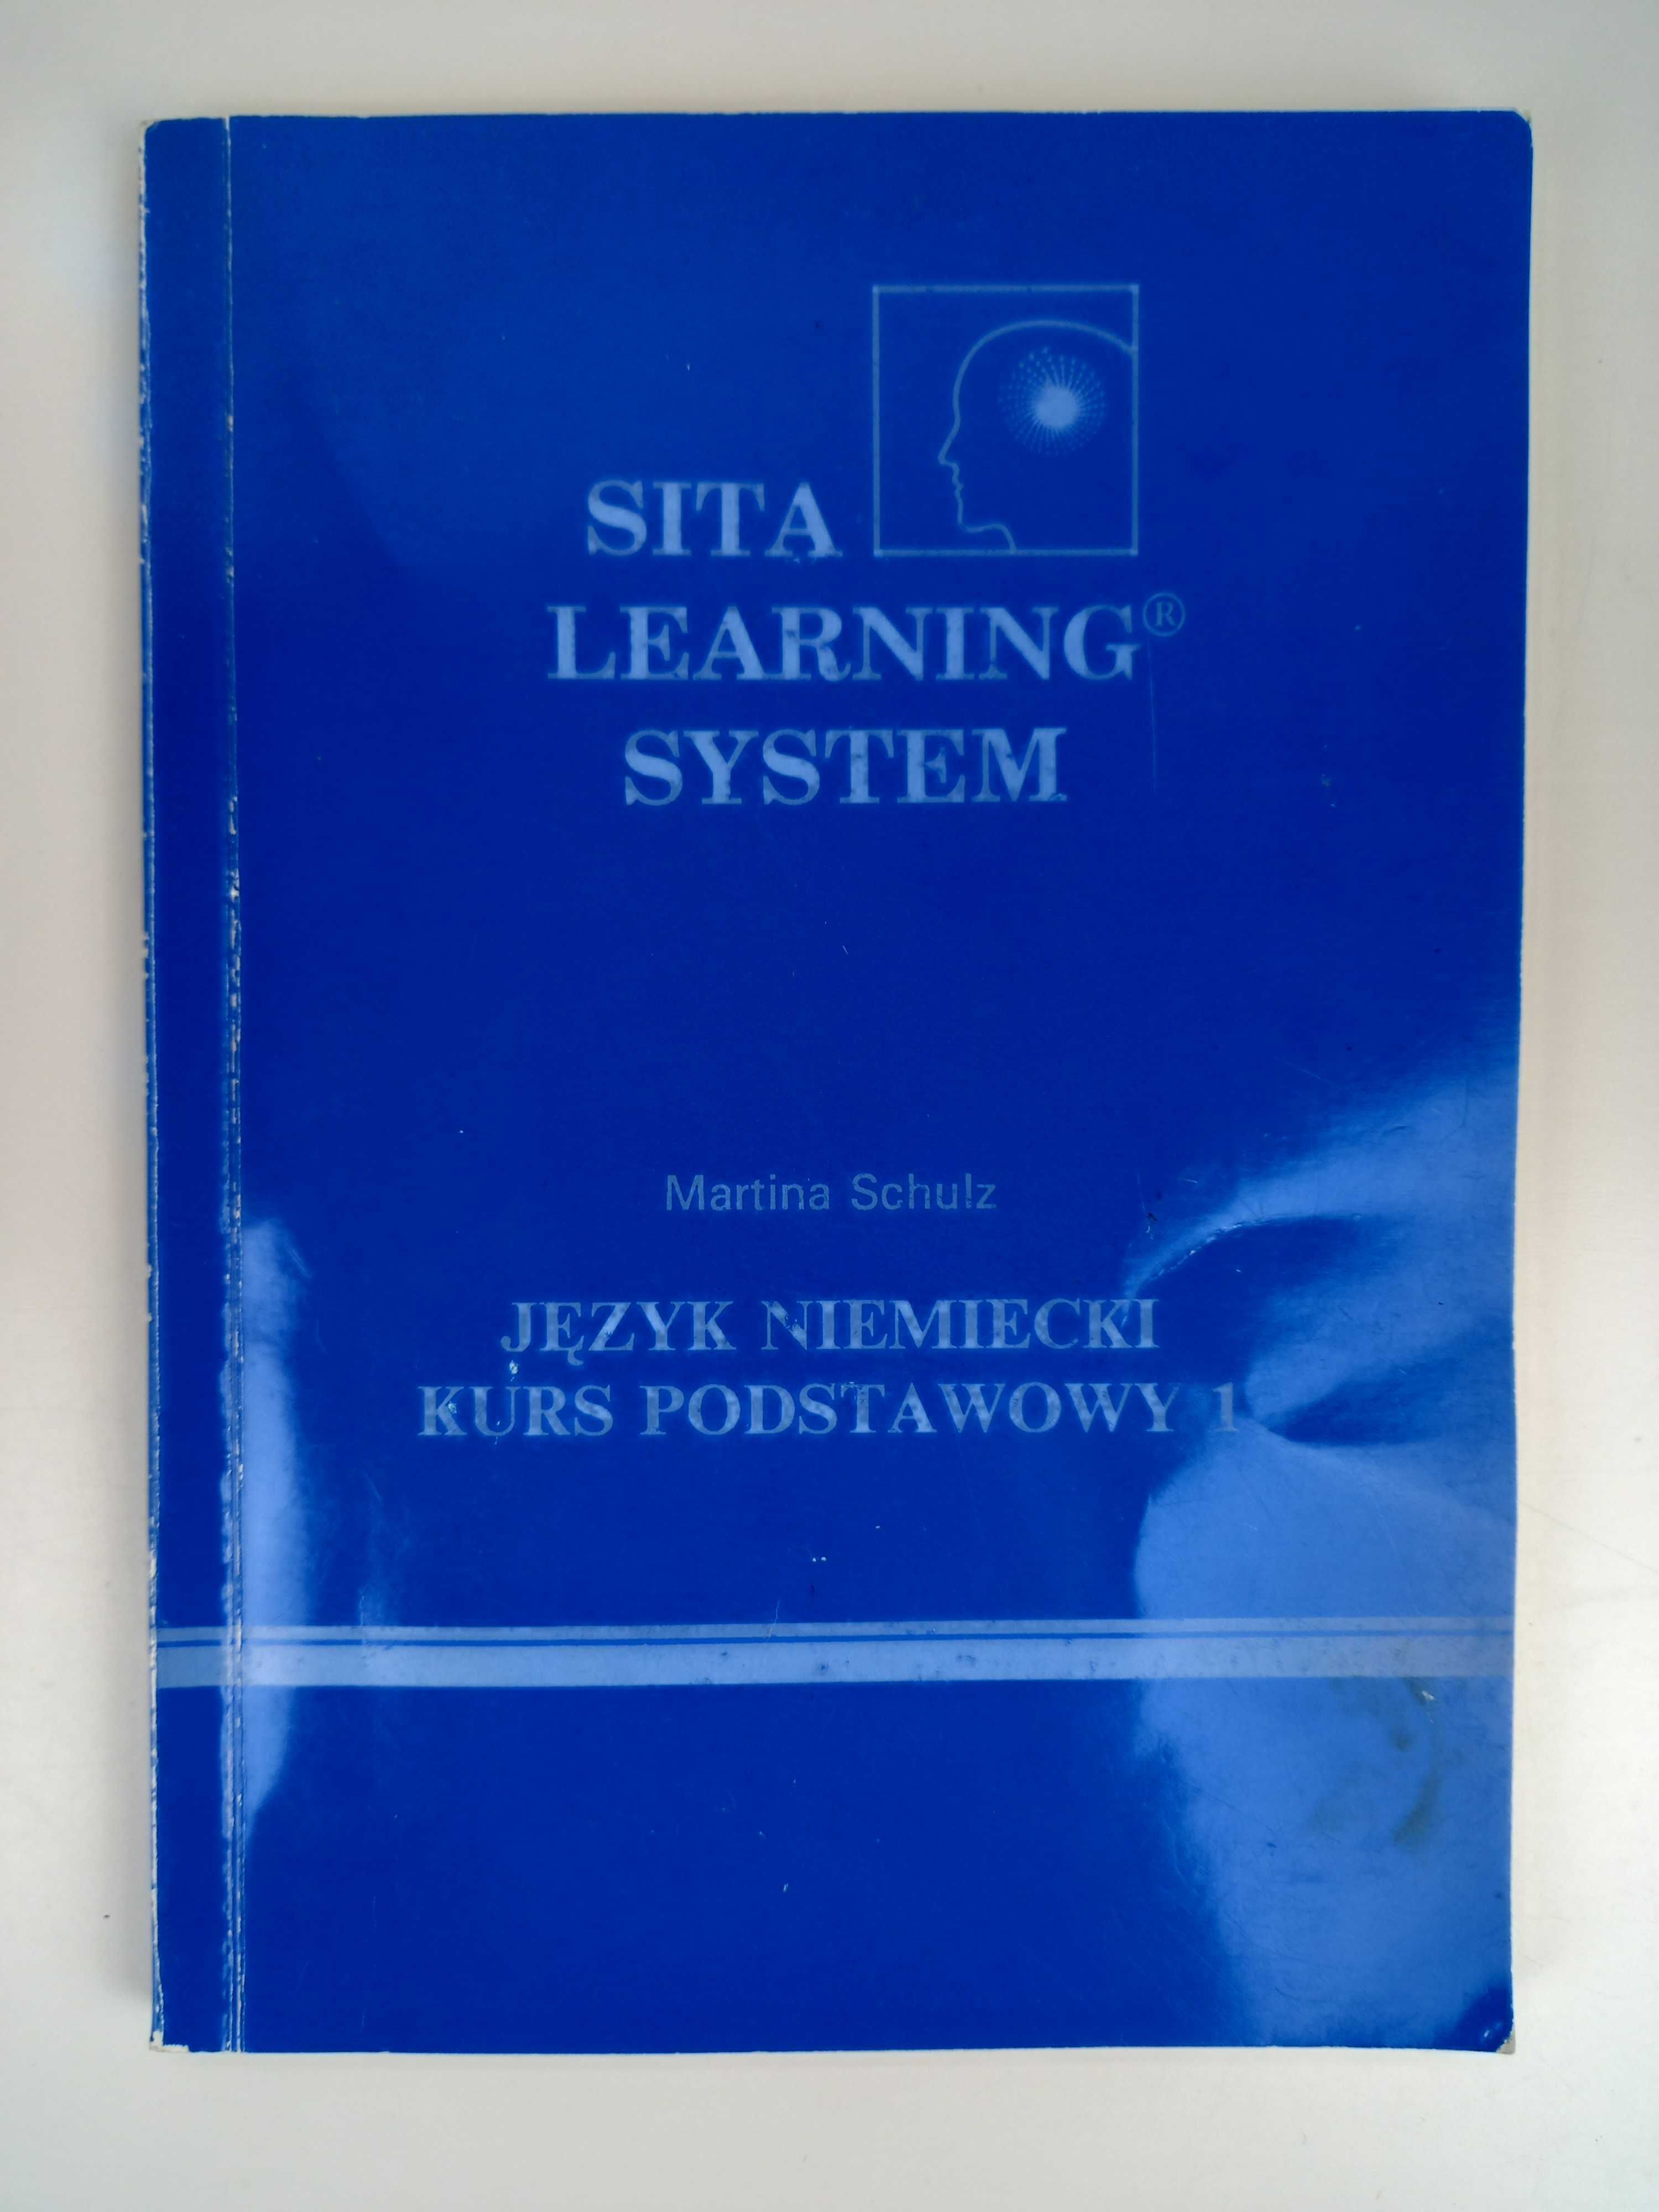 Sita Learning System 3103 D-2080 Pinneberg + kasety język niemiecki